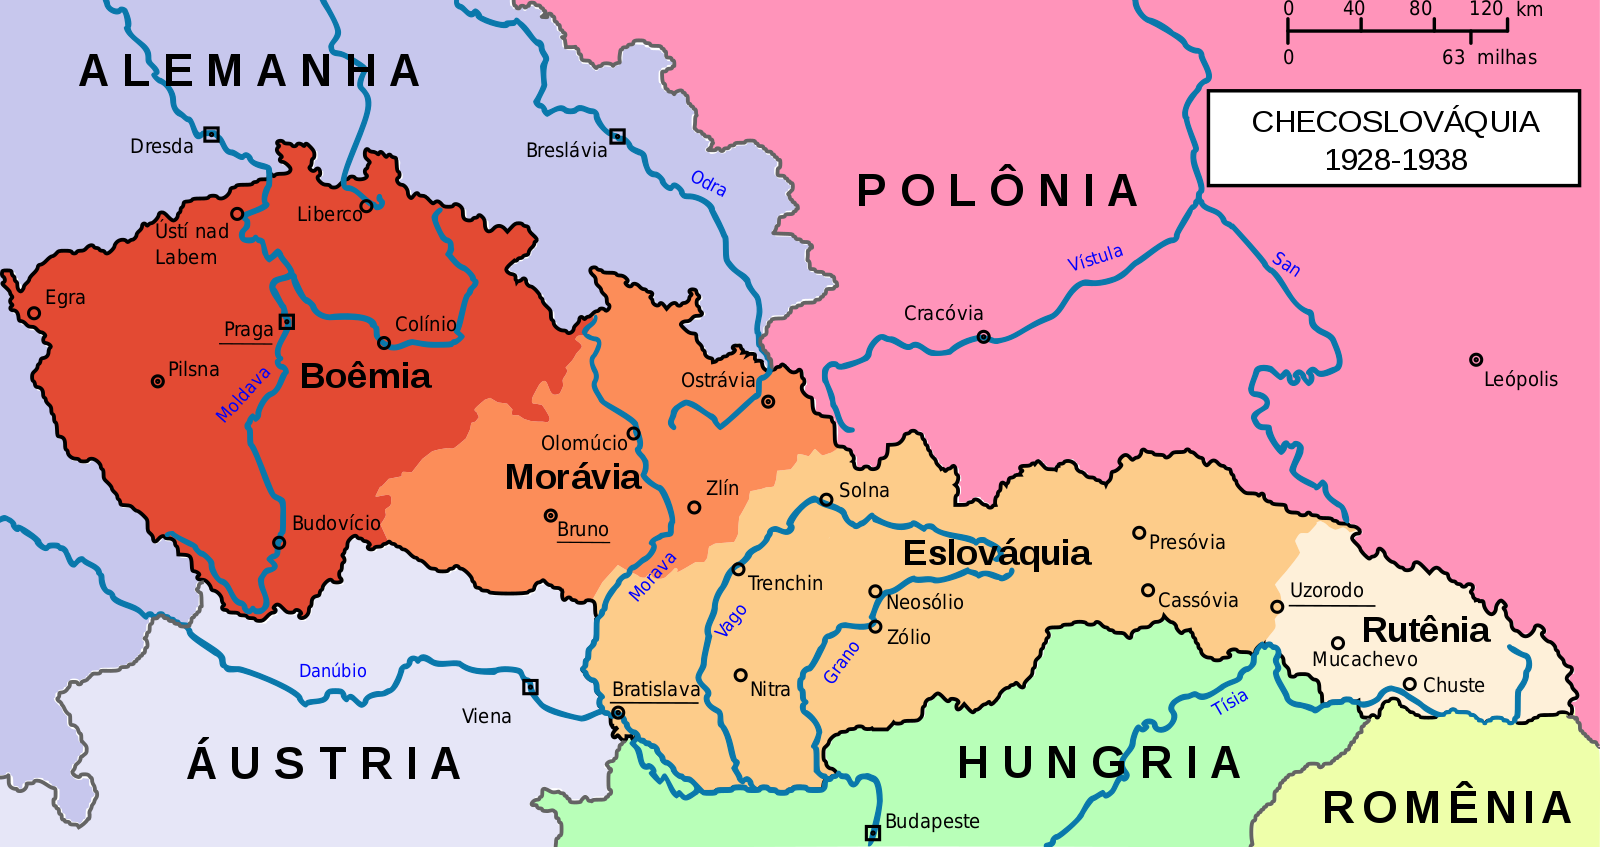 Чехия Богемия Моравия Силезия. Моравия на карте Чехии. Карта Чехословакии 1938. Регионы Чехии Богемия Моравия.